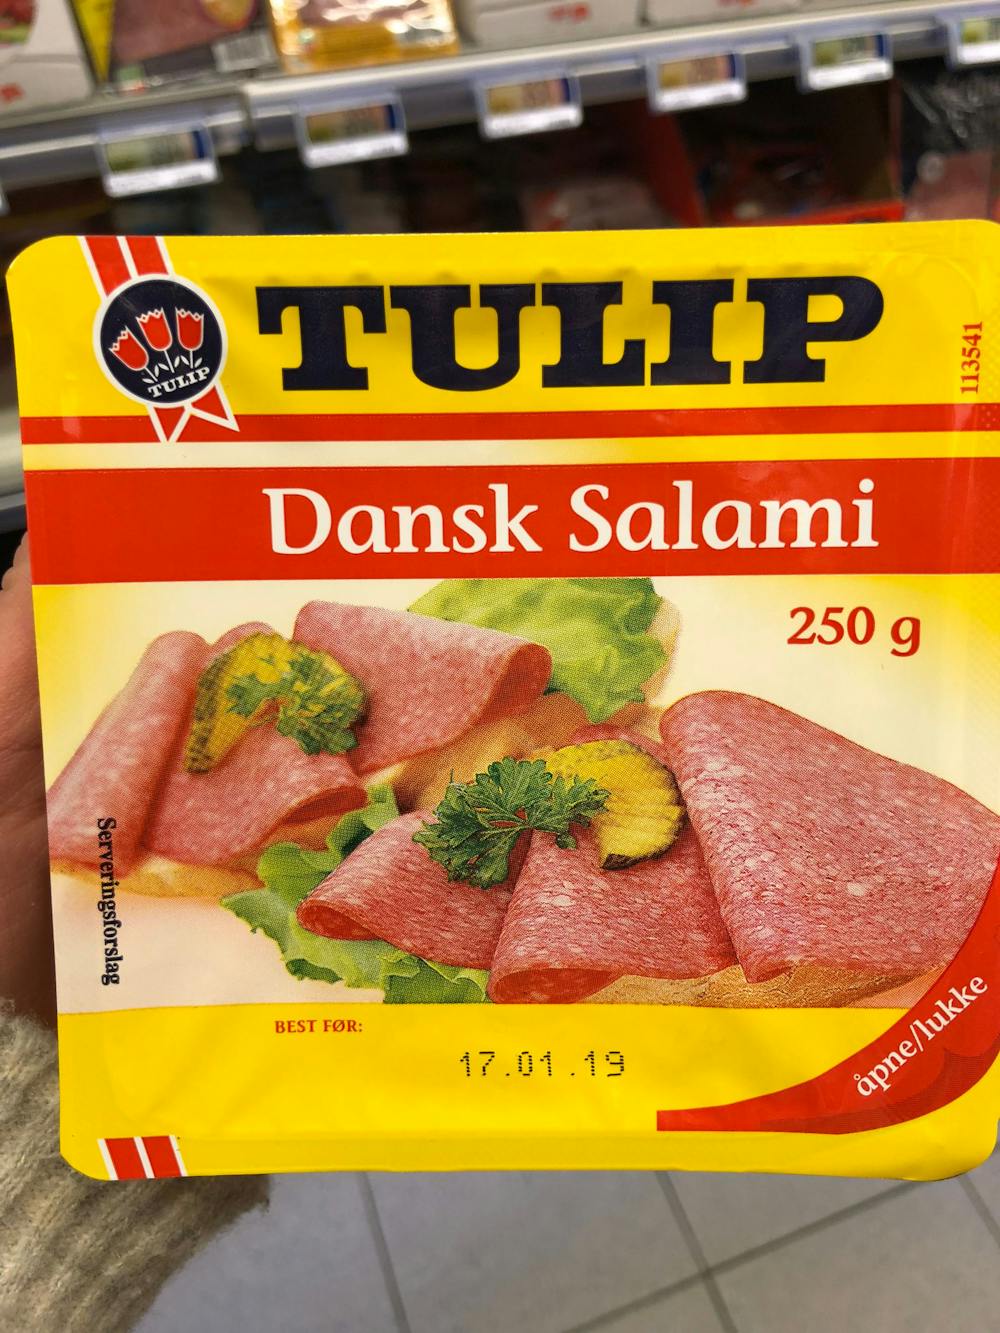 Dansk salami, Tulip